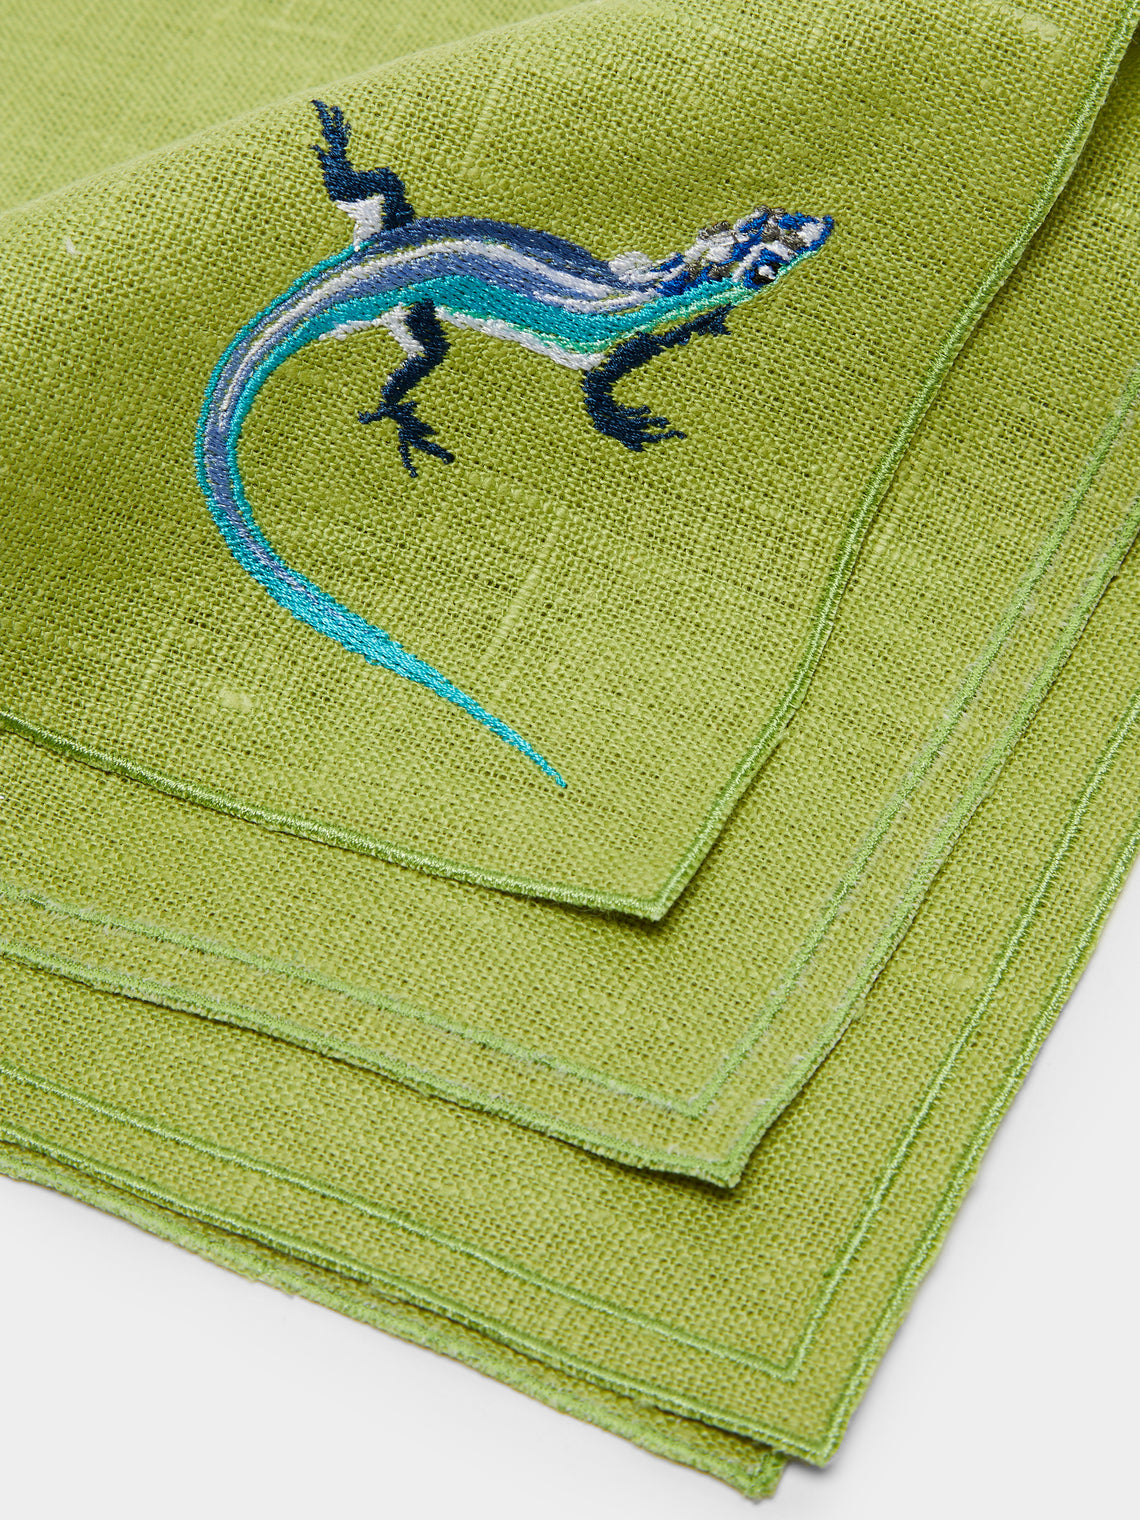 La Gallina Matta - Jungle Animals Embroidered Linen Napkins (Set of 6) -  - ABASK